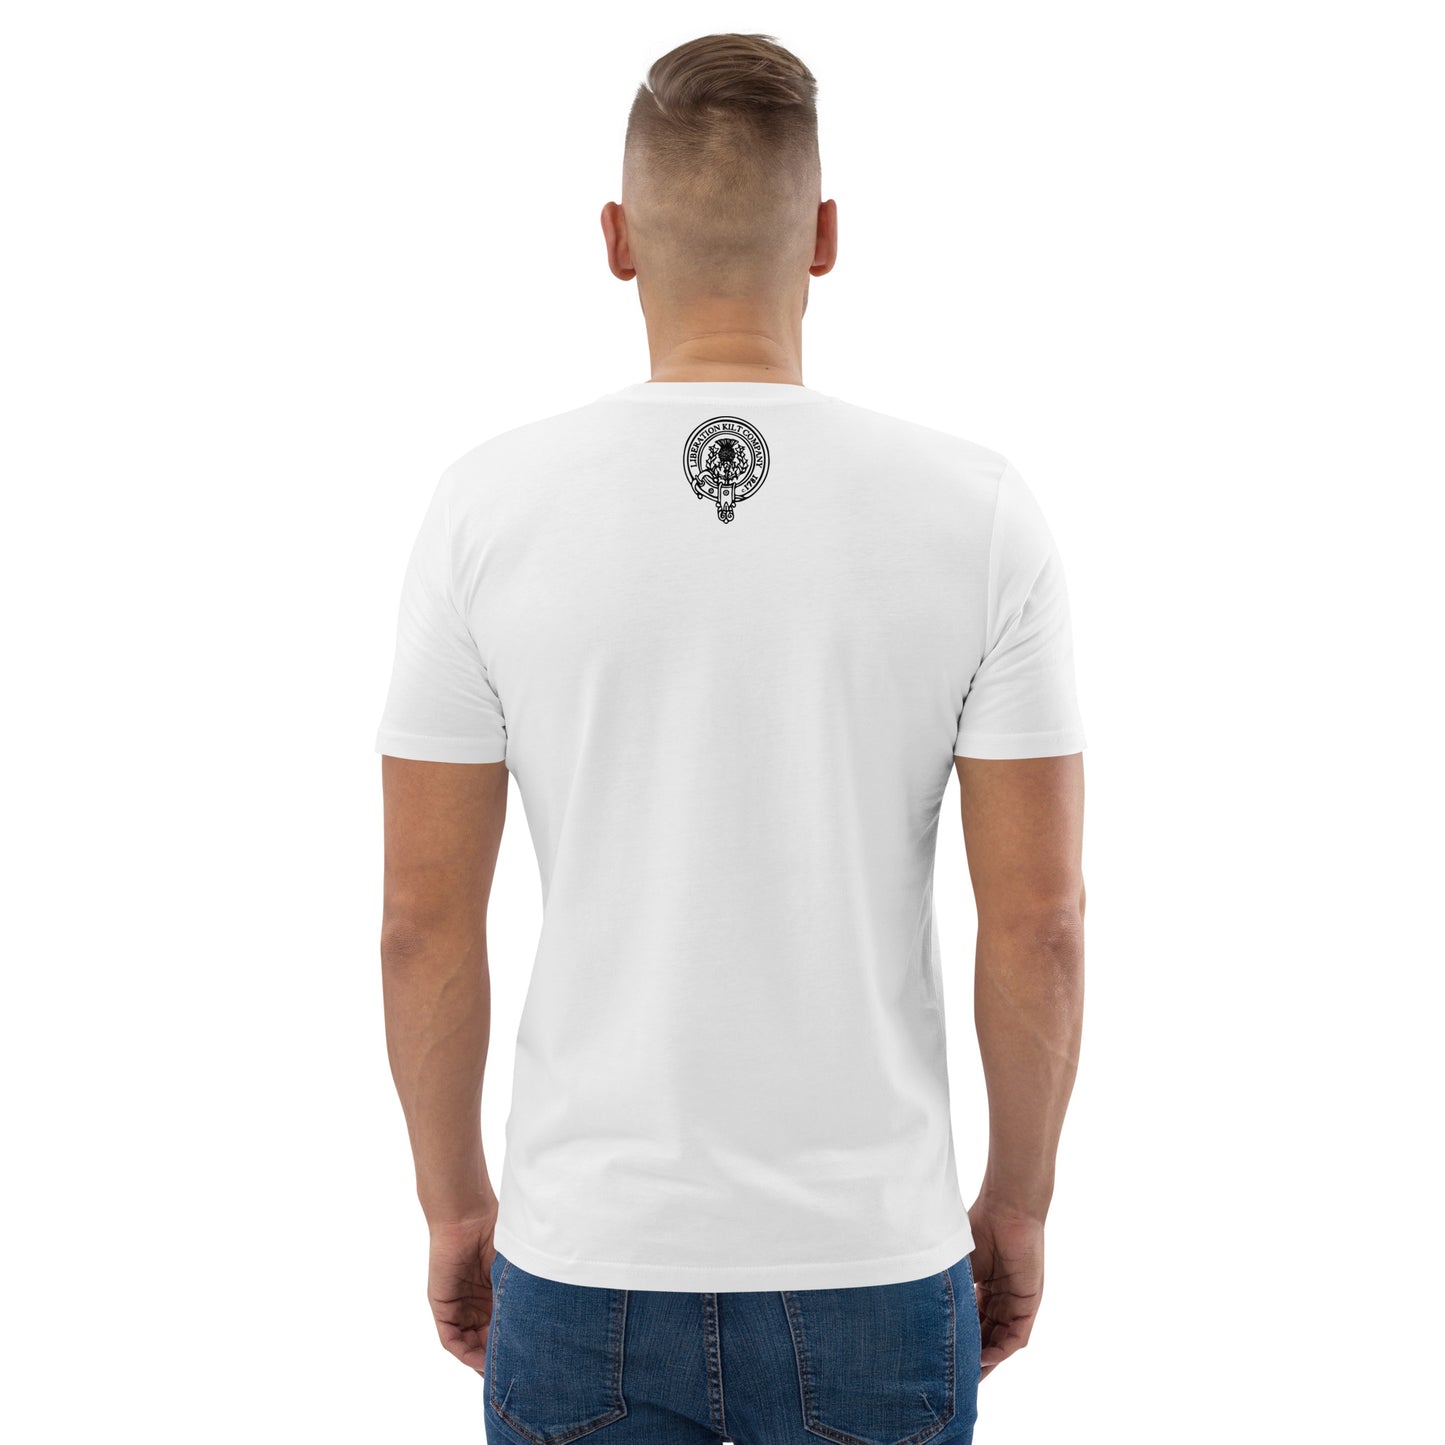 PIPE DREAM White/Khaki Unisex T-Shirt B/W Print